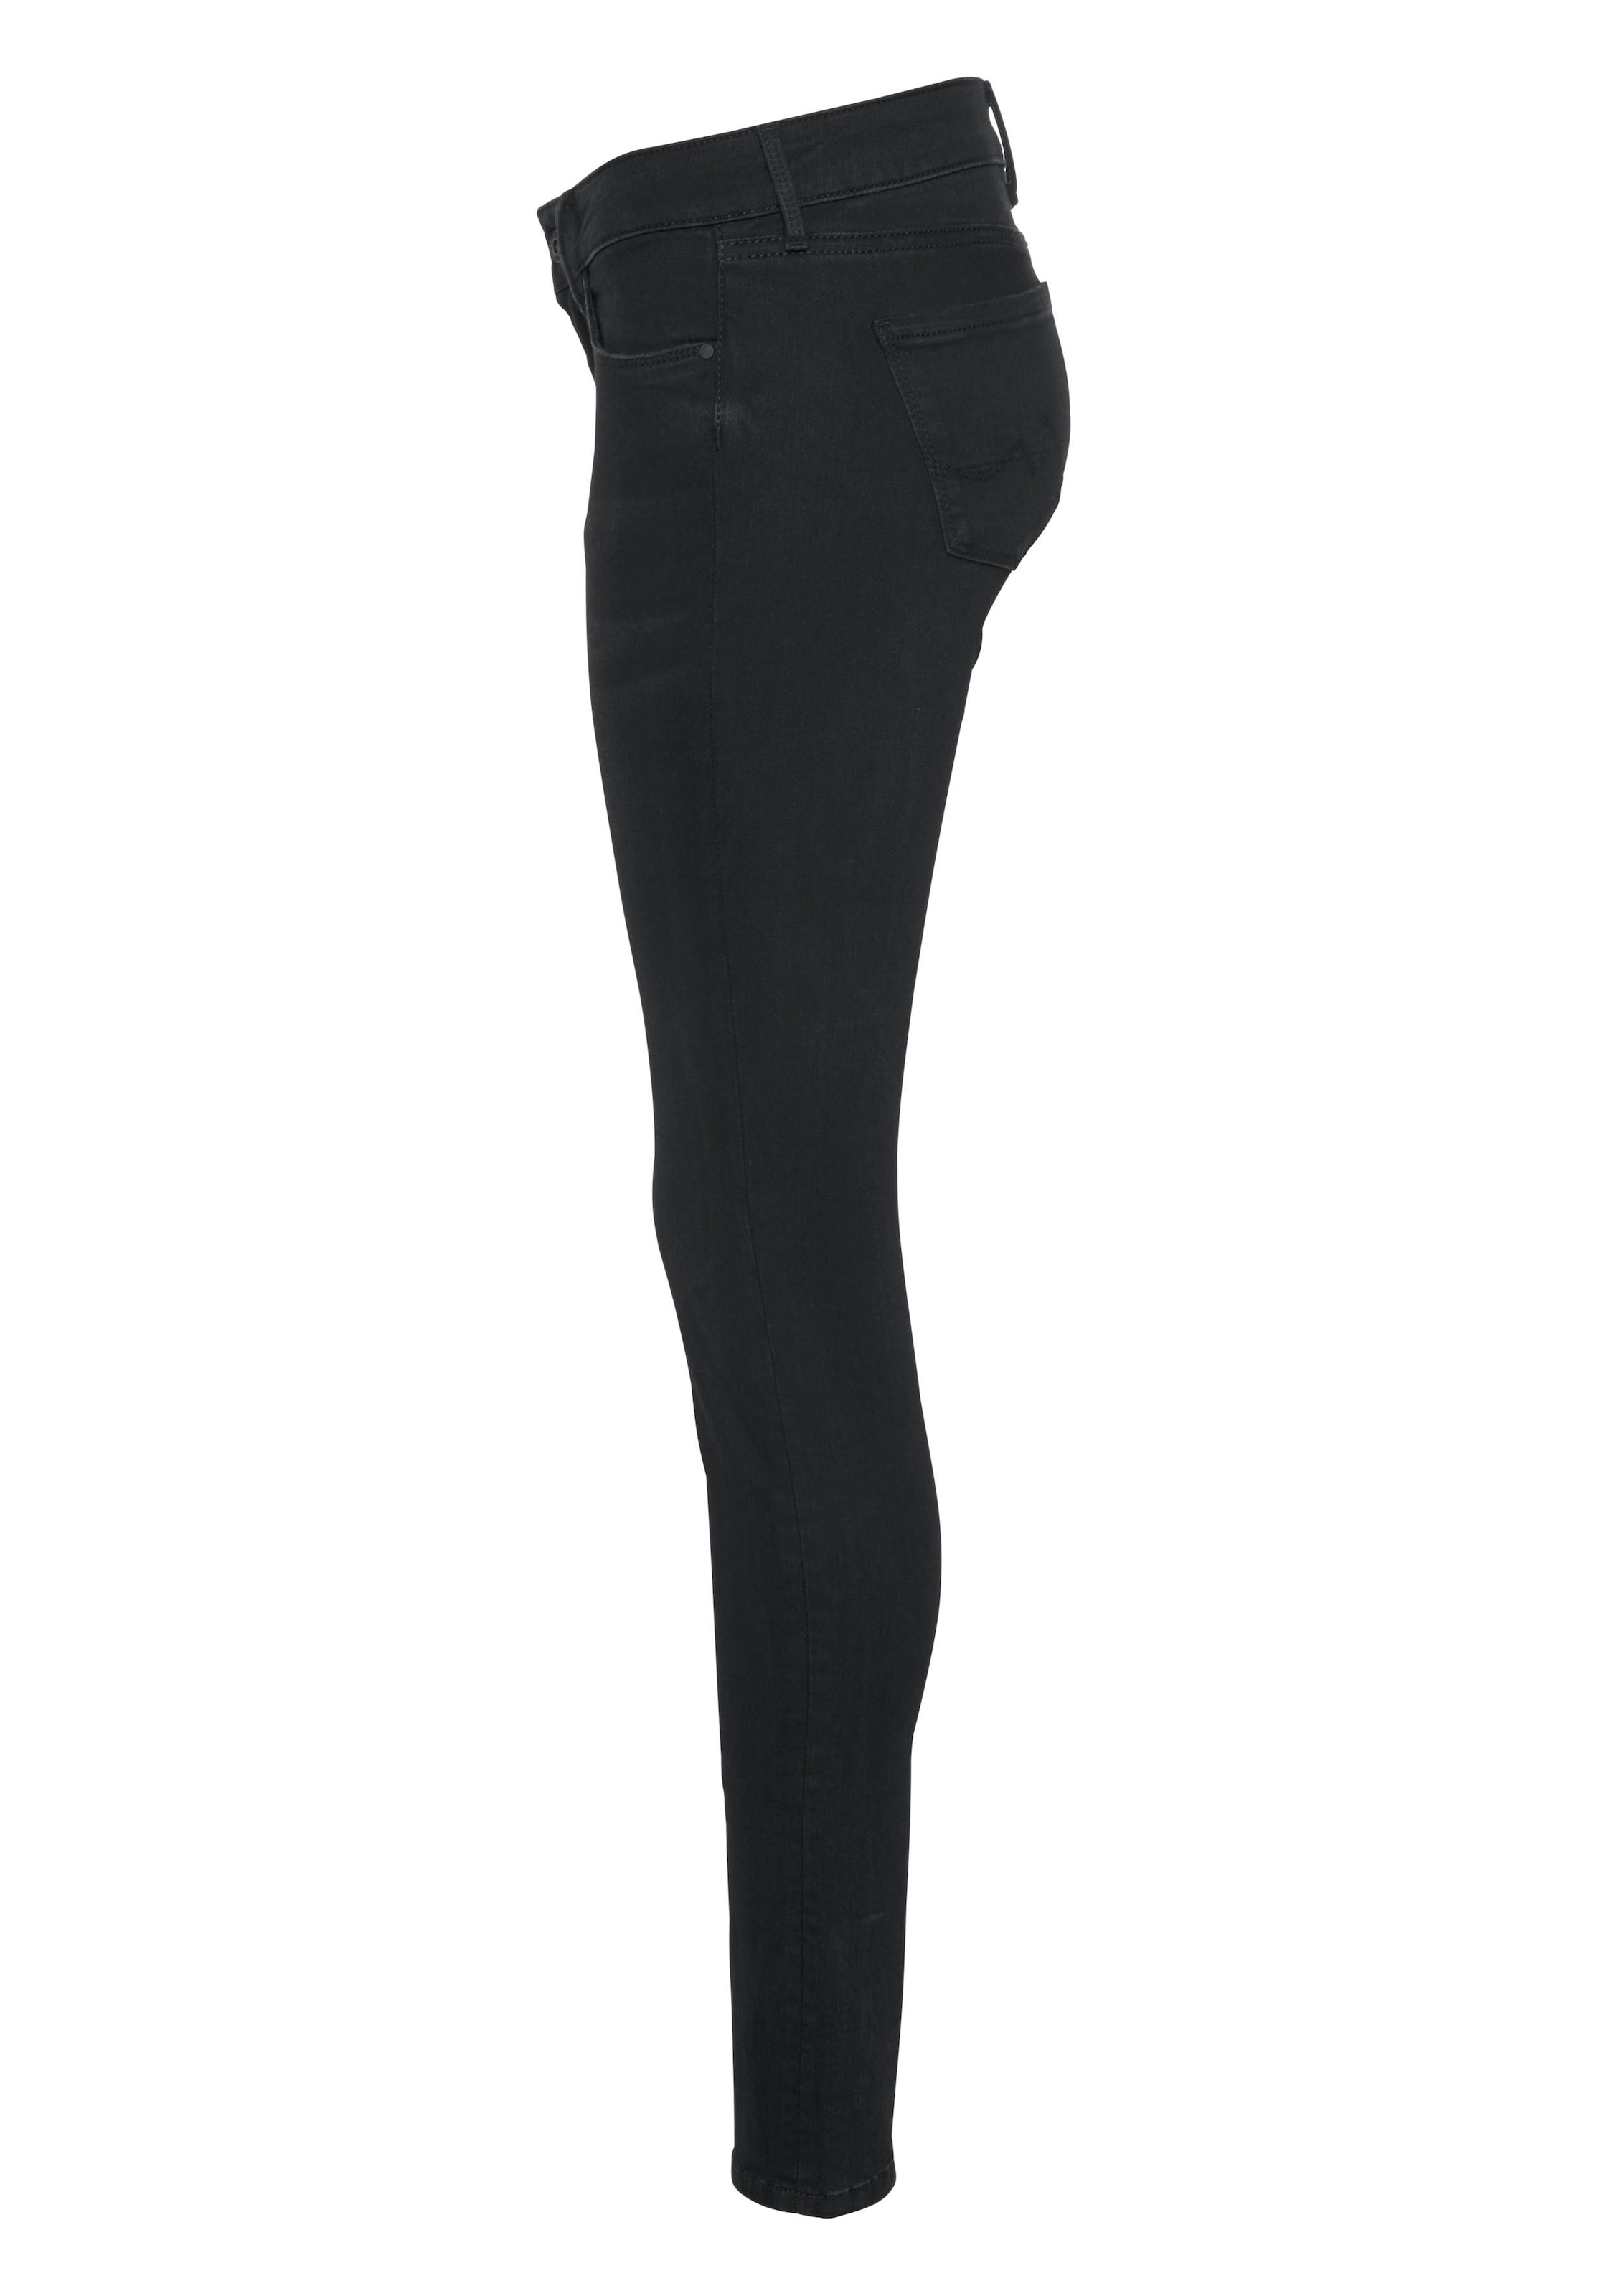 Pepe Jeans Skinny-fit-Jeans »SOHO«, im 5-Pocket-Stil mit 1-Knopf Bund und Stretch-Anteil